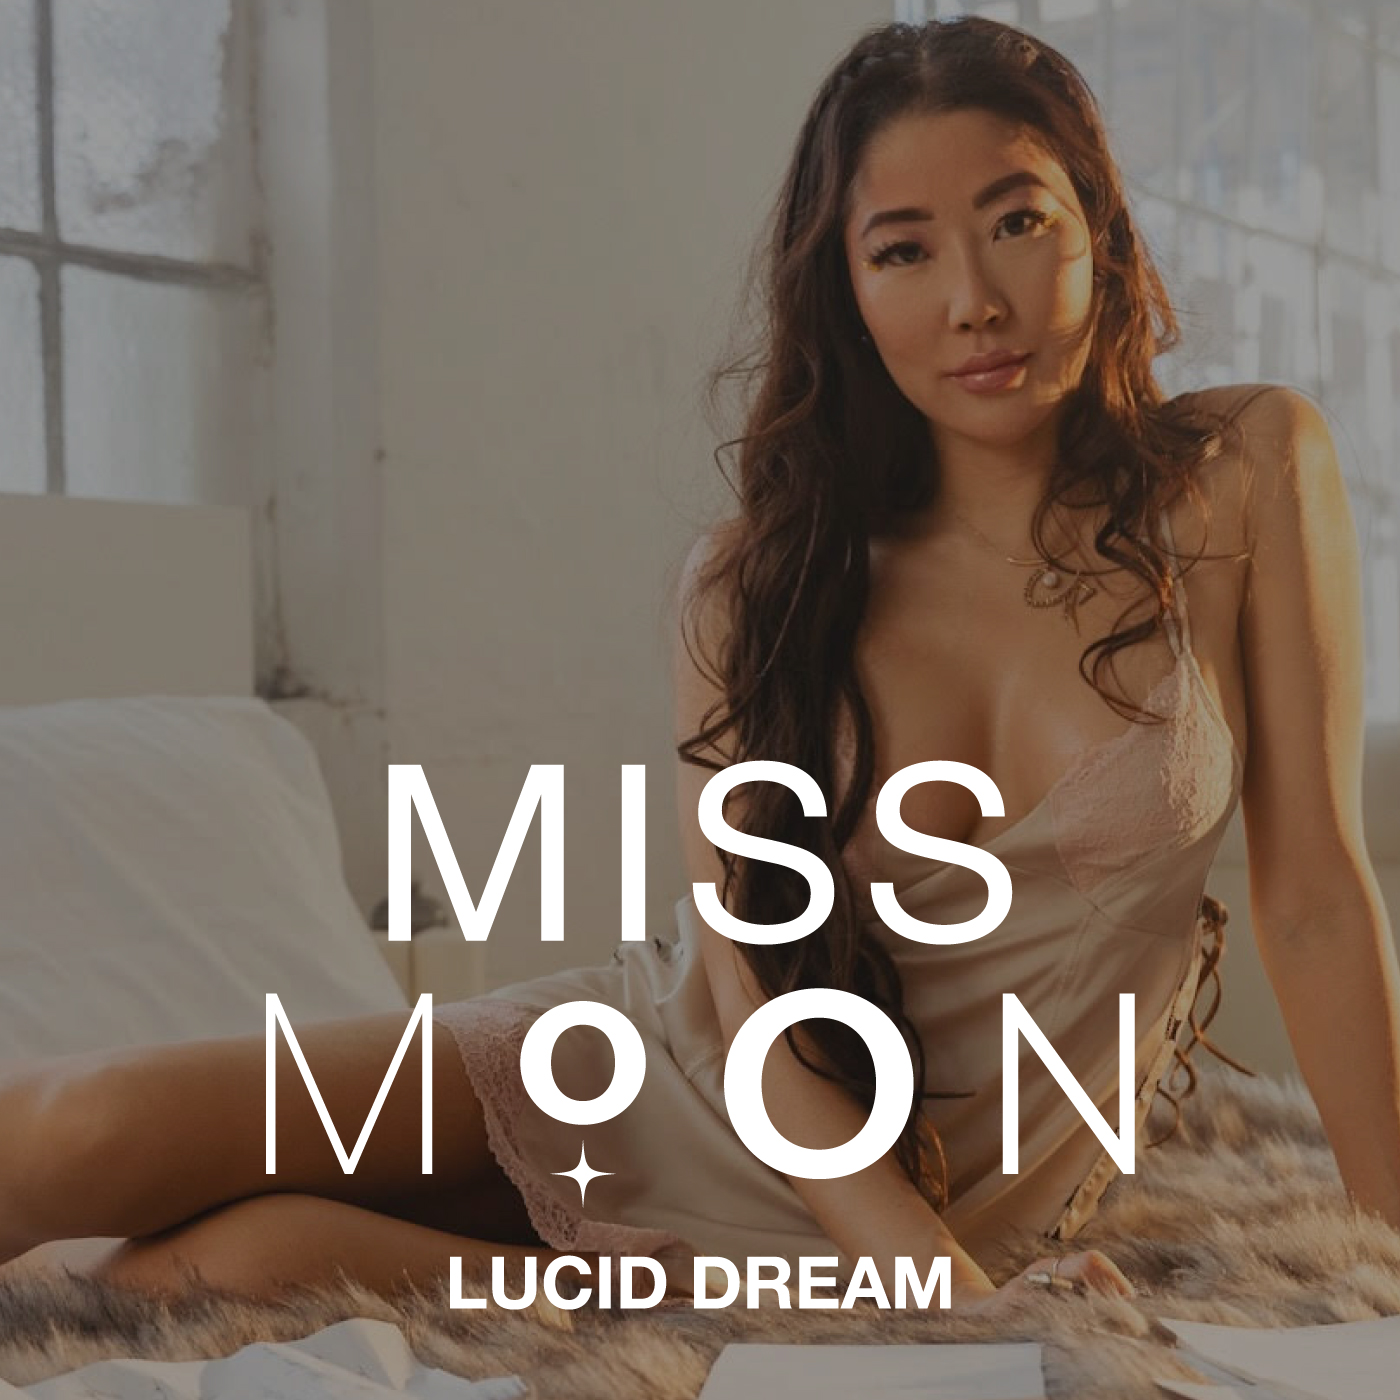 Moon Maison Miss 'Moon (Lucid Dream)'